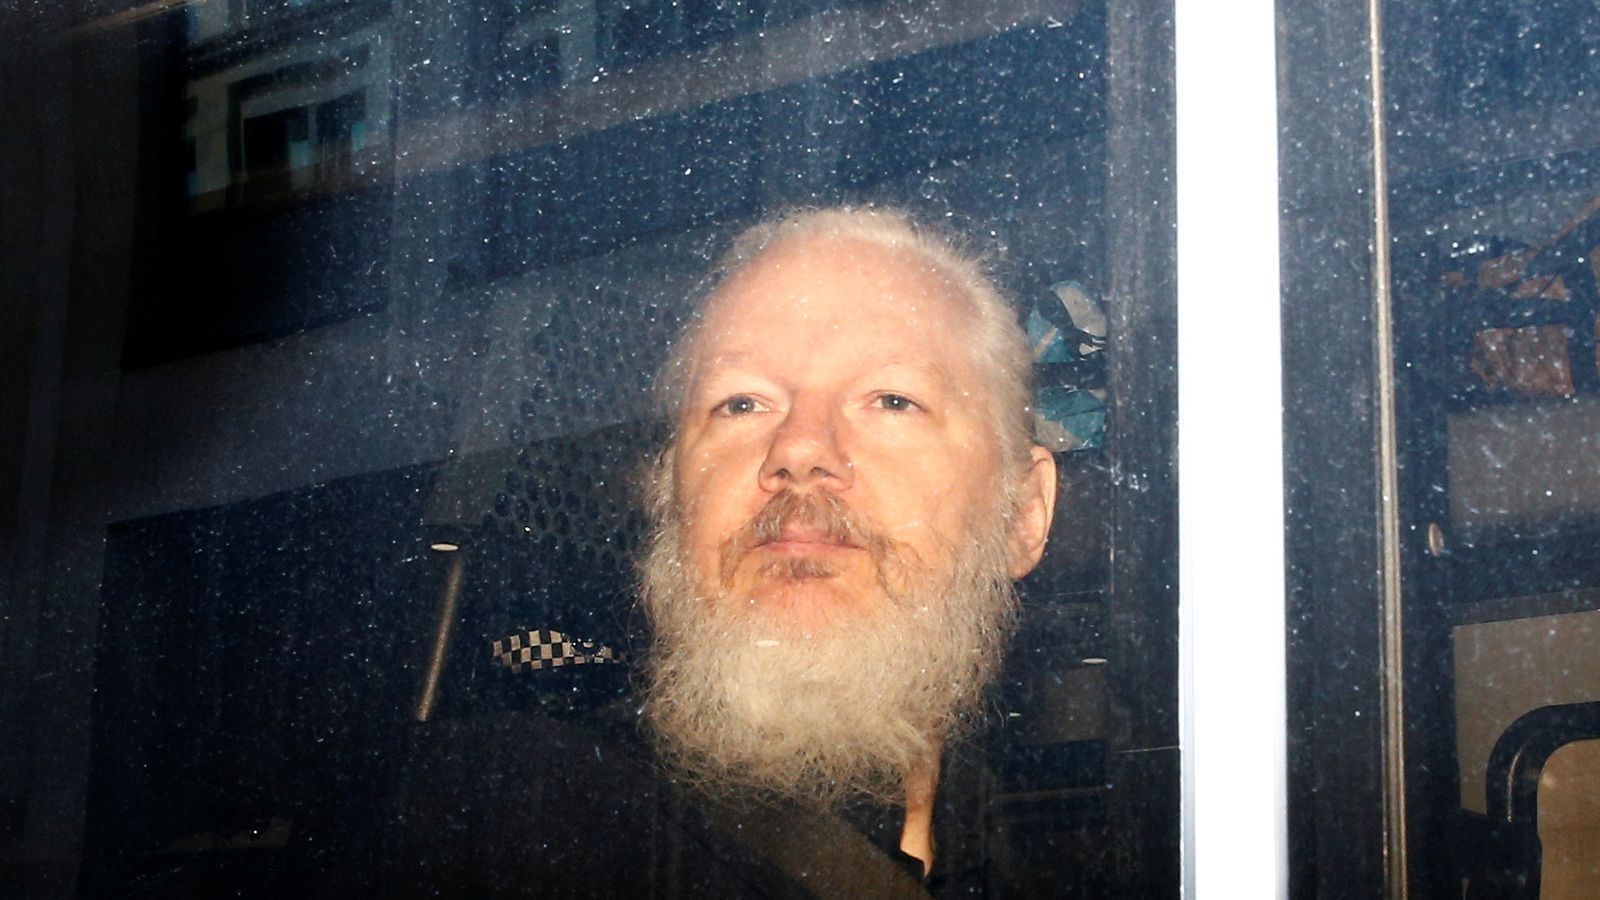 Julian Assange put through 'hell' at embassy, says former diplomat